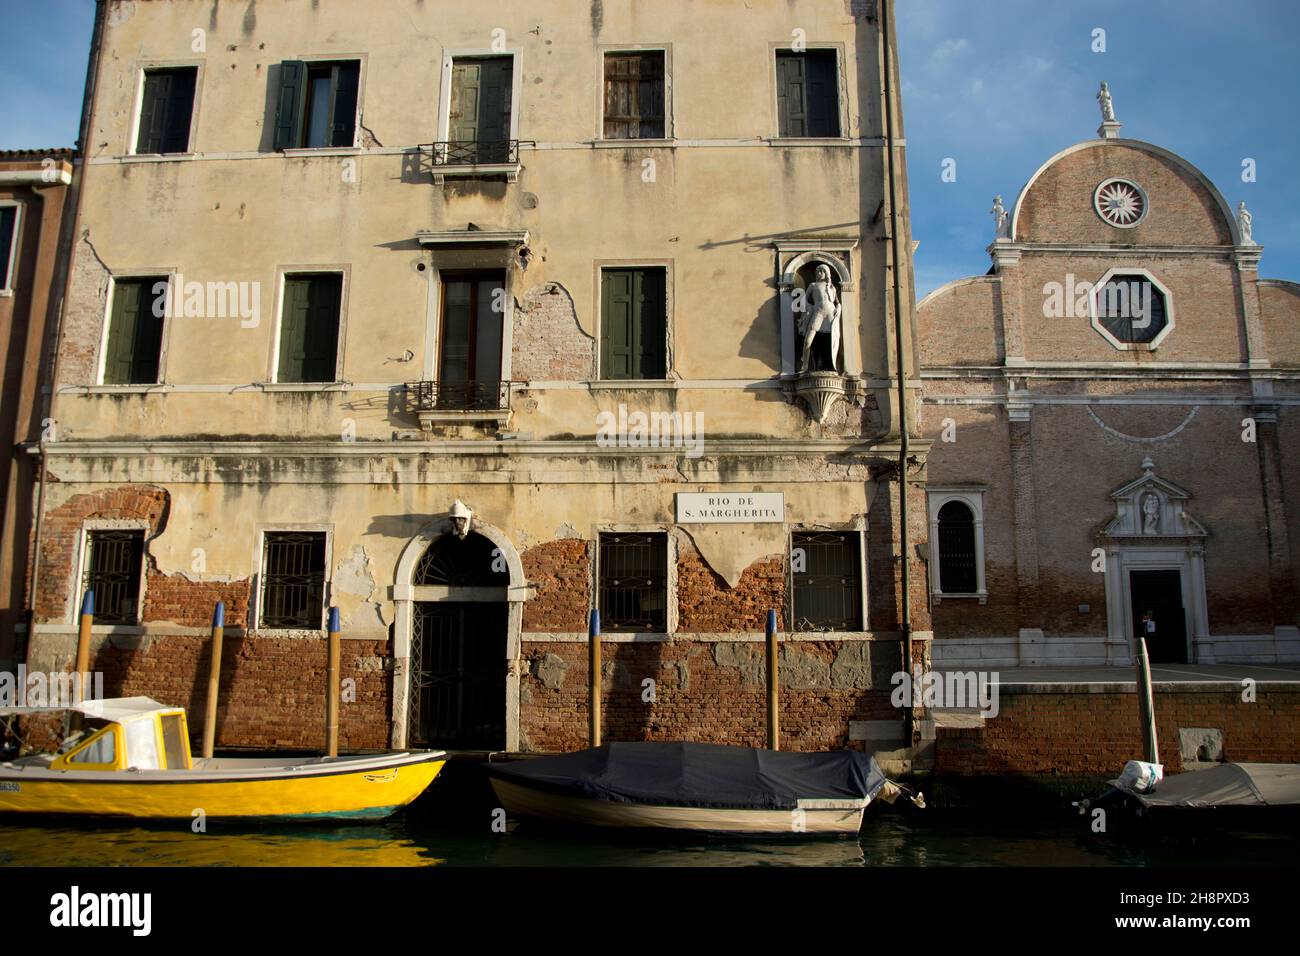 Verwitterte Gebäude mit bröckelnder Fassade in Venedig Stock Photo